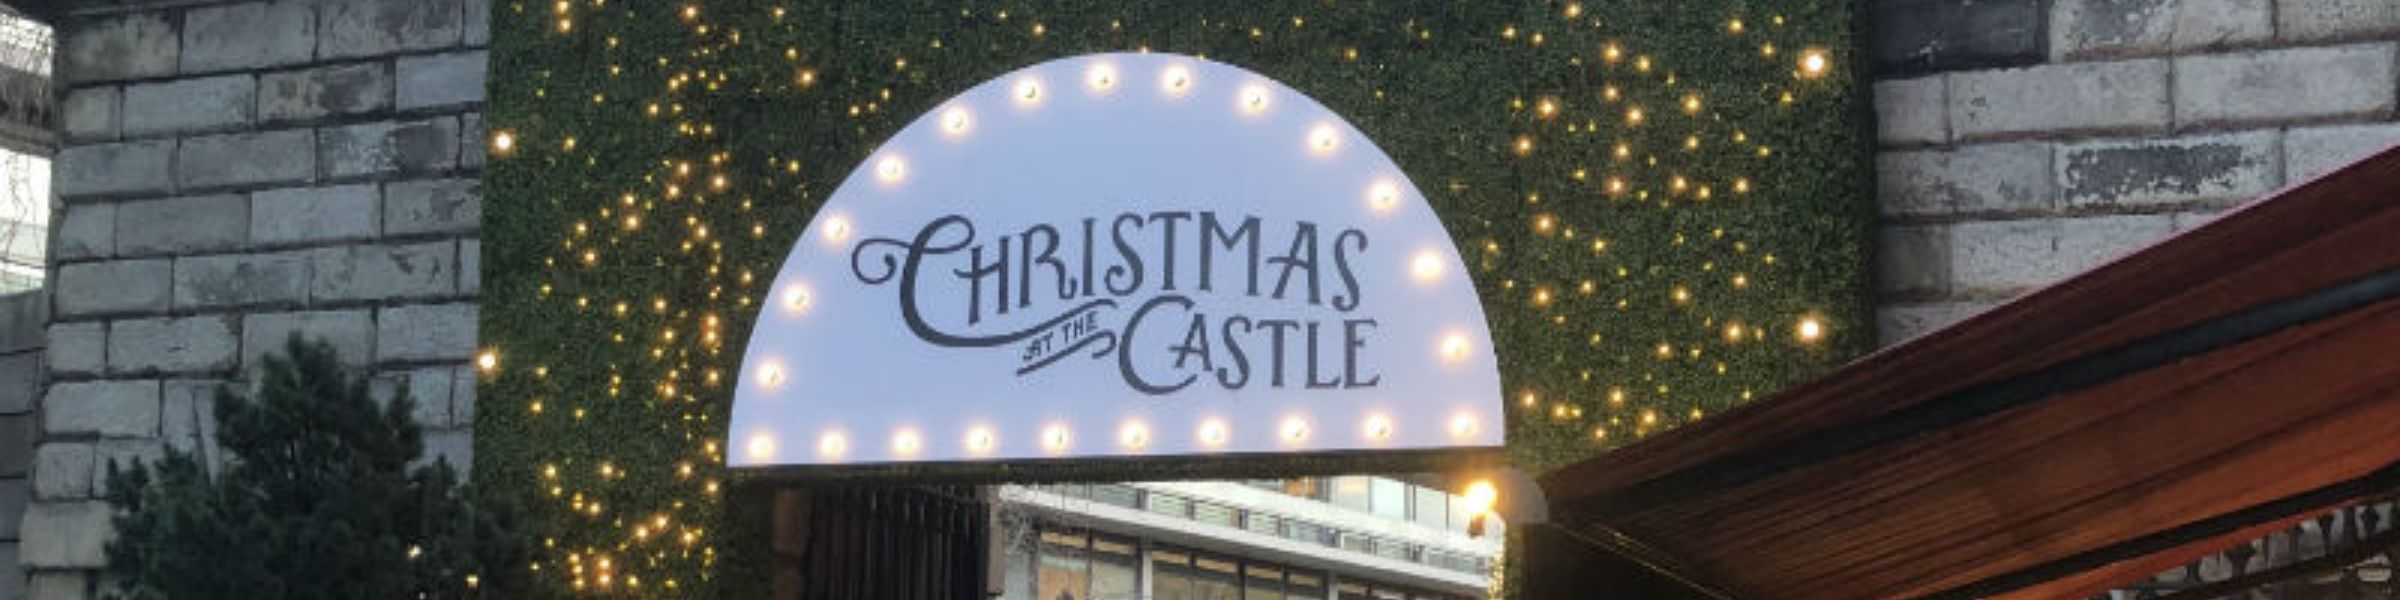 Dublin Castle Christmas Market - The Grafton Hotel